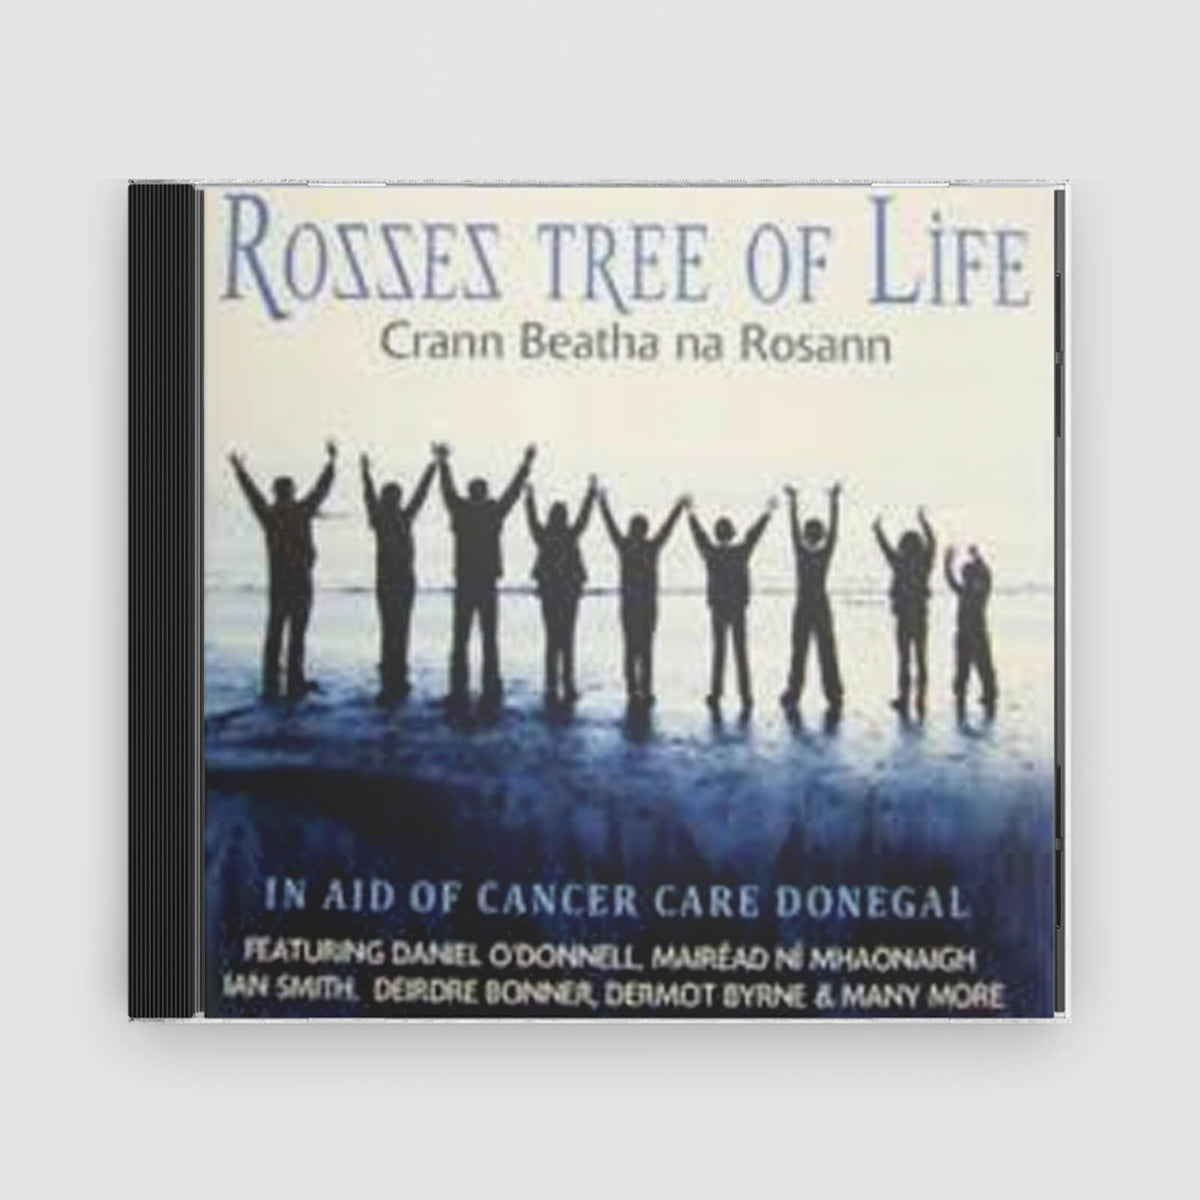 Various : Rosses Tree of Life - Creann Beatha na Rosann